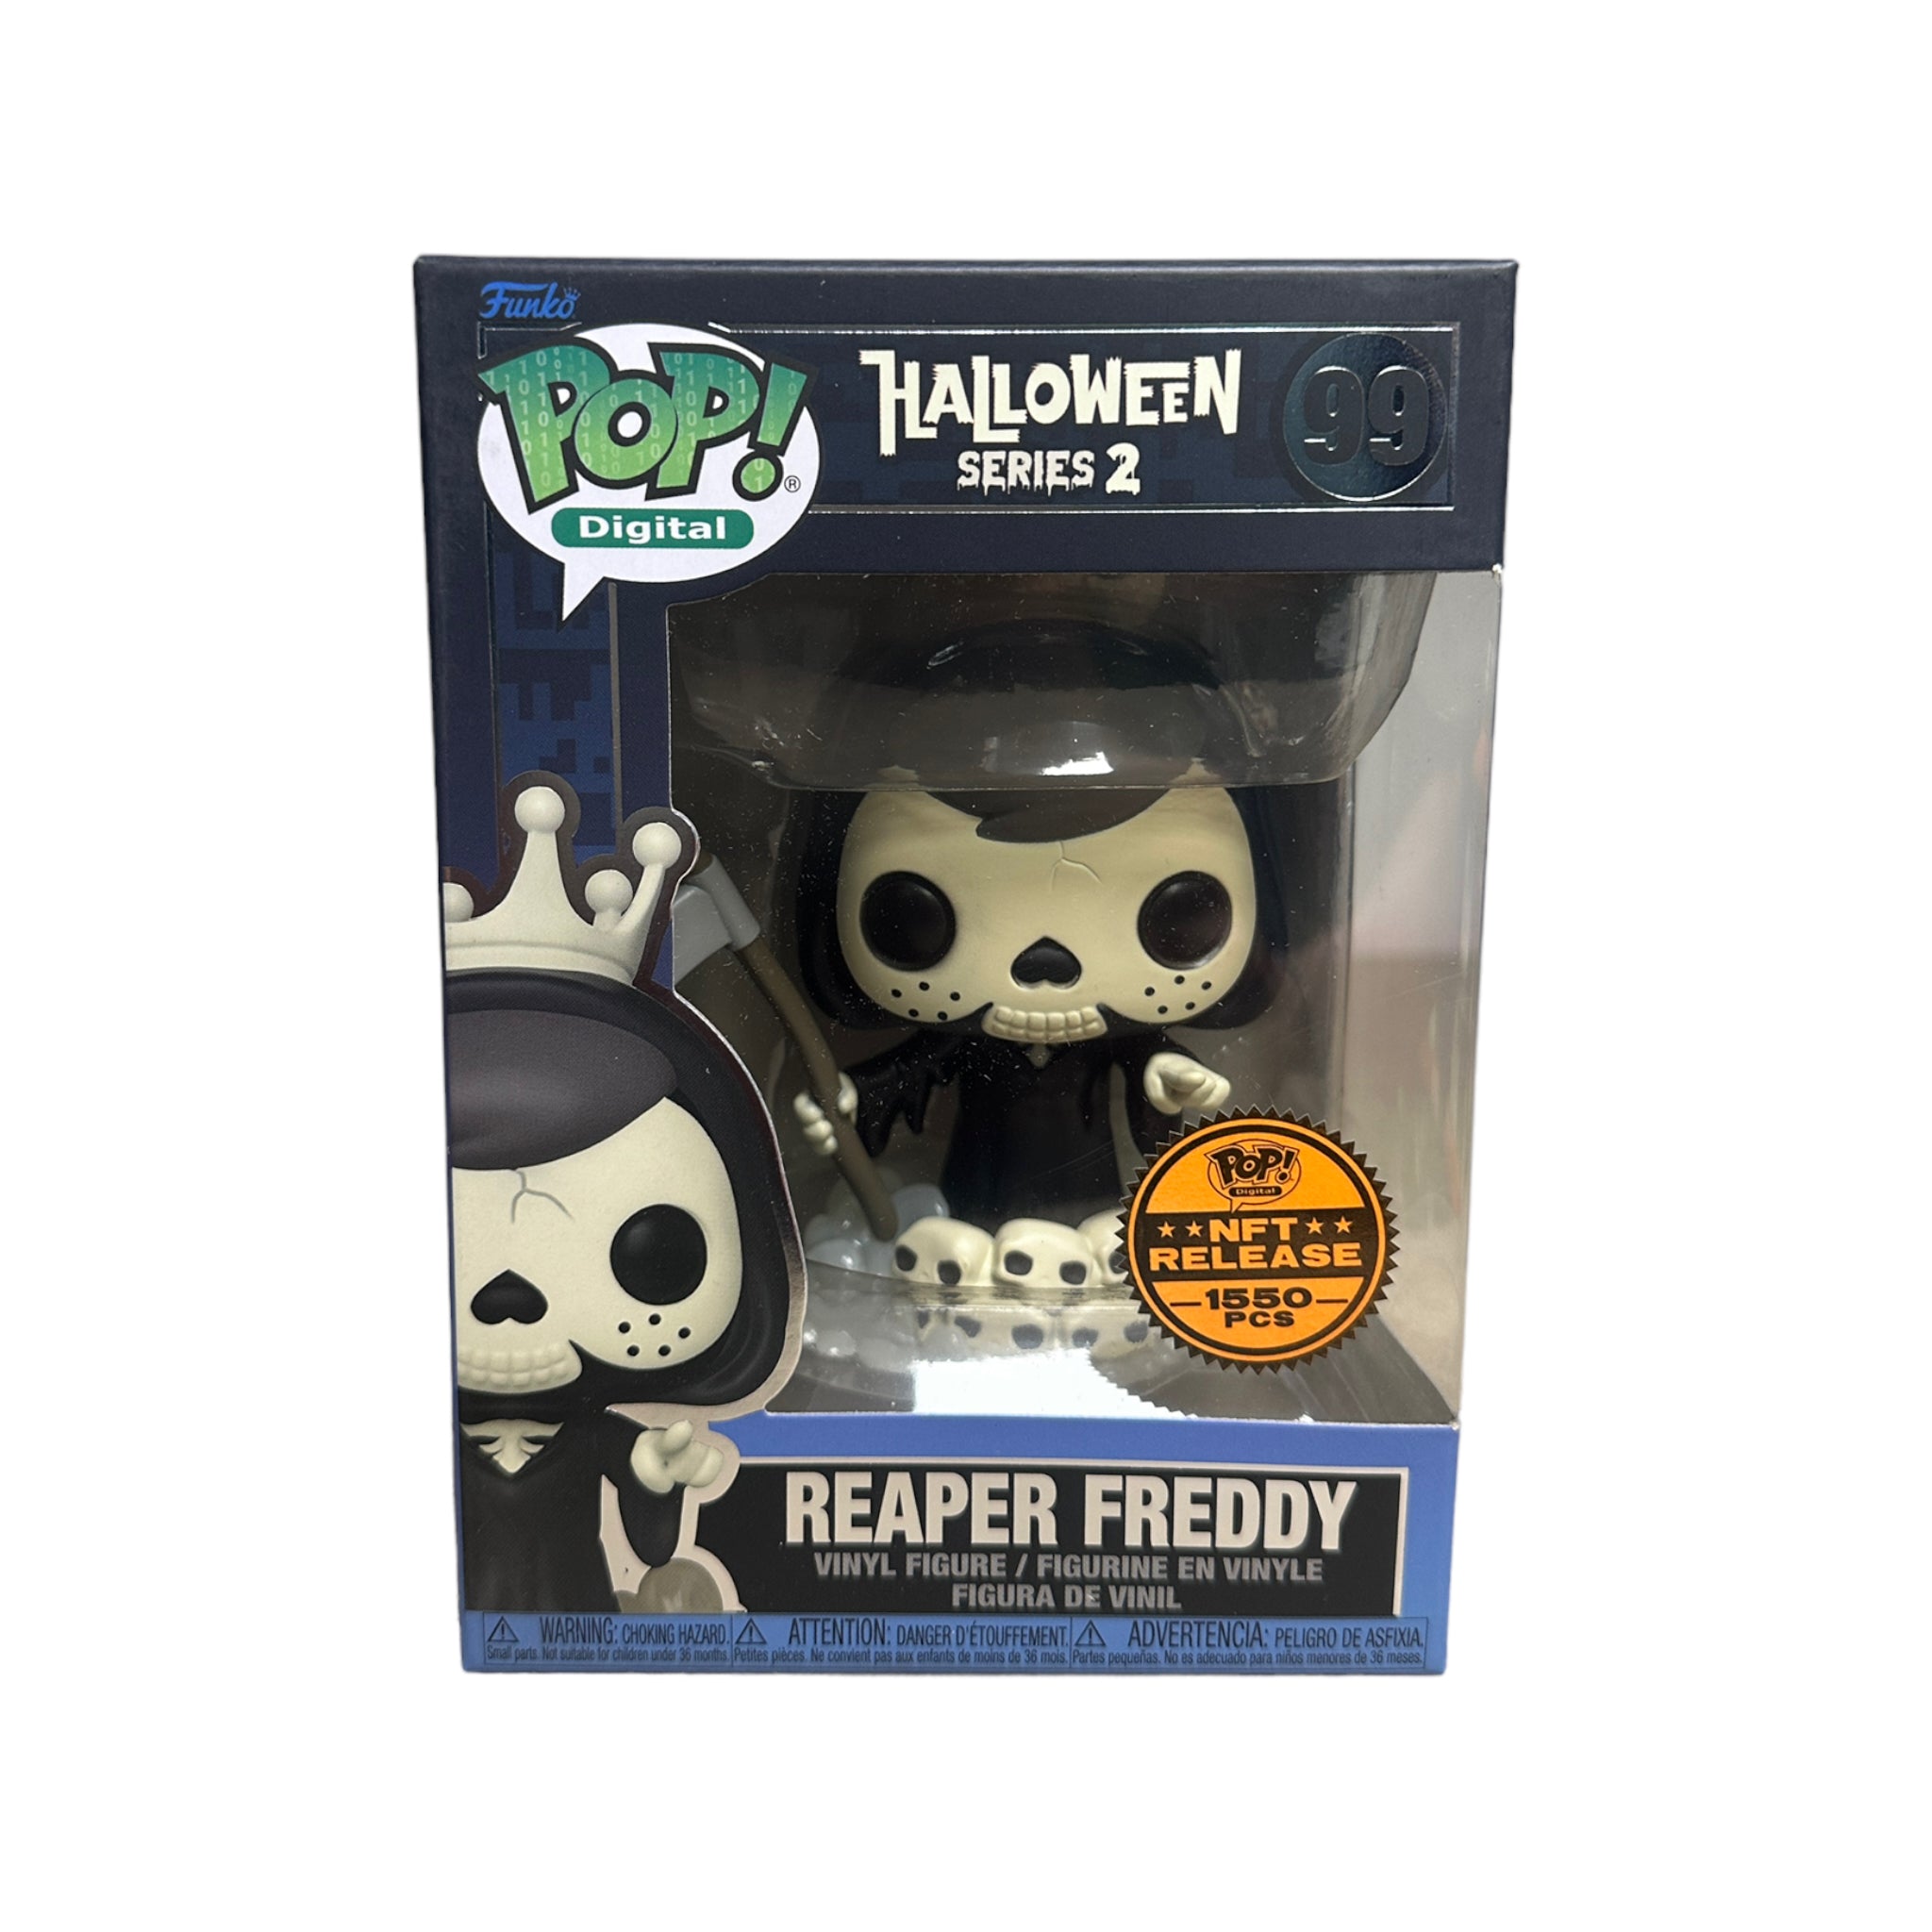 Reaper Freddy #99 Funko Pop! - Halloween Series 2 - NFT Release Exclusive LE1550 Pcs - Condition 9/10